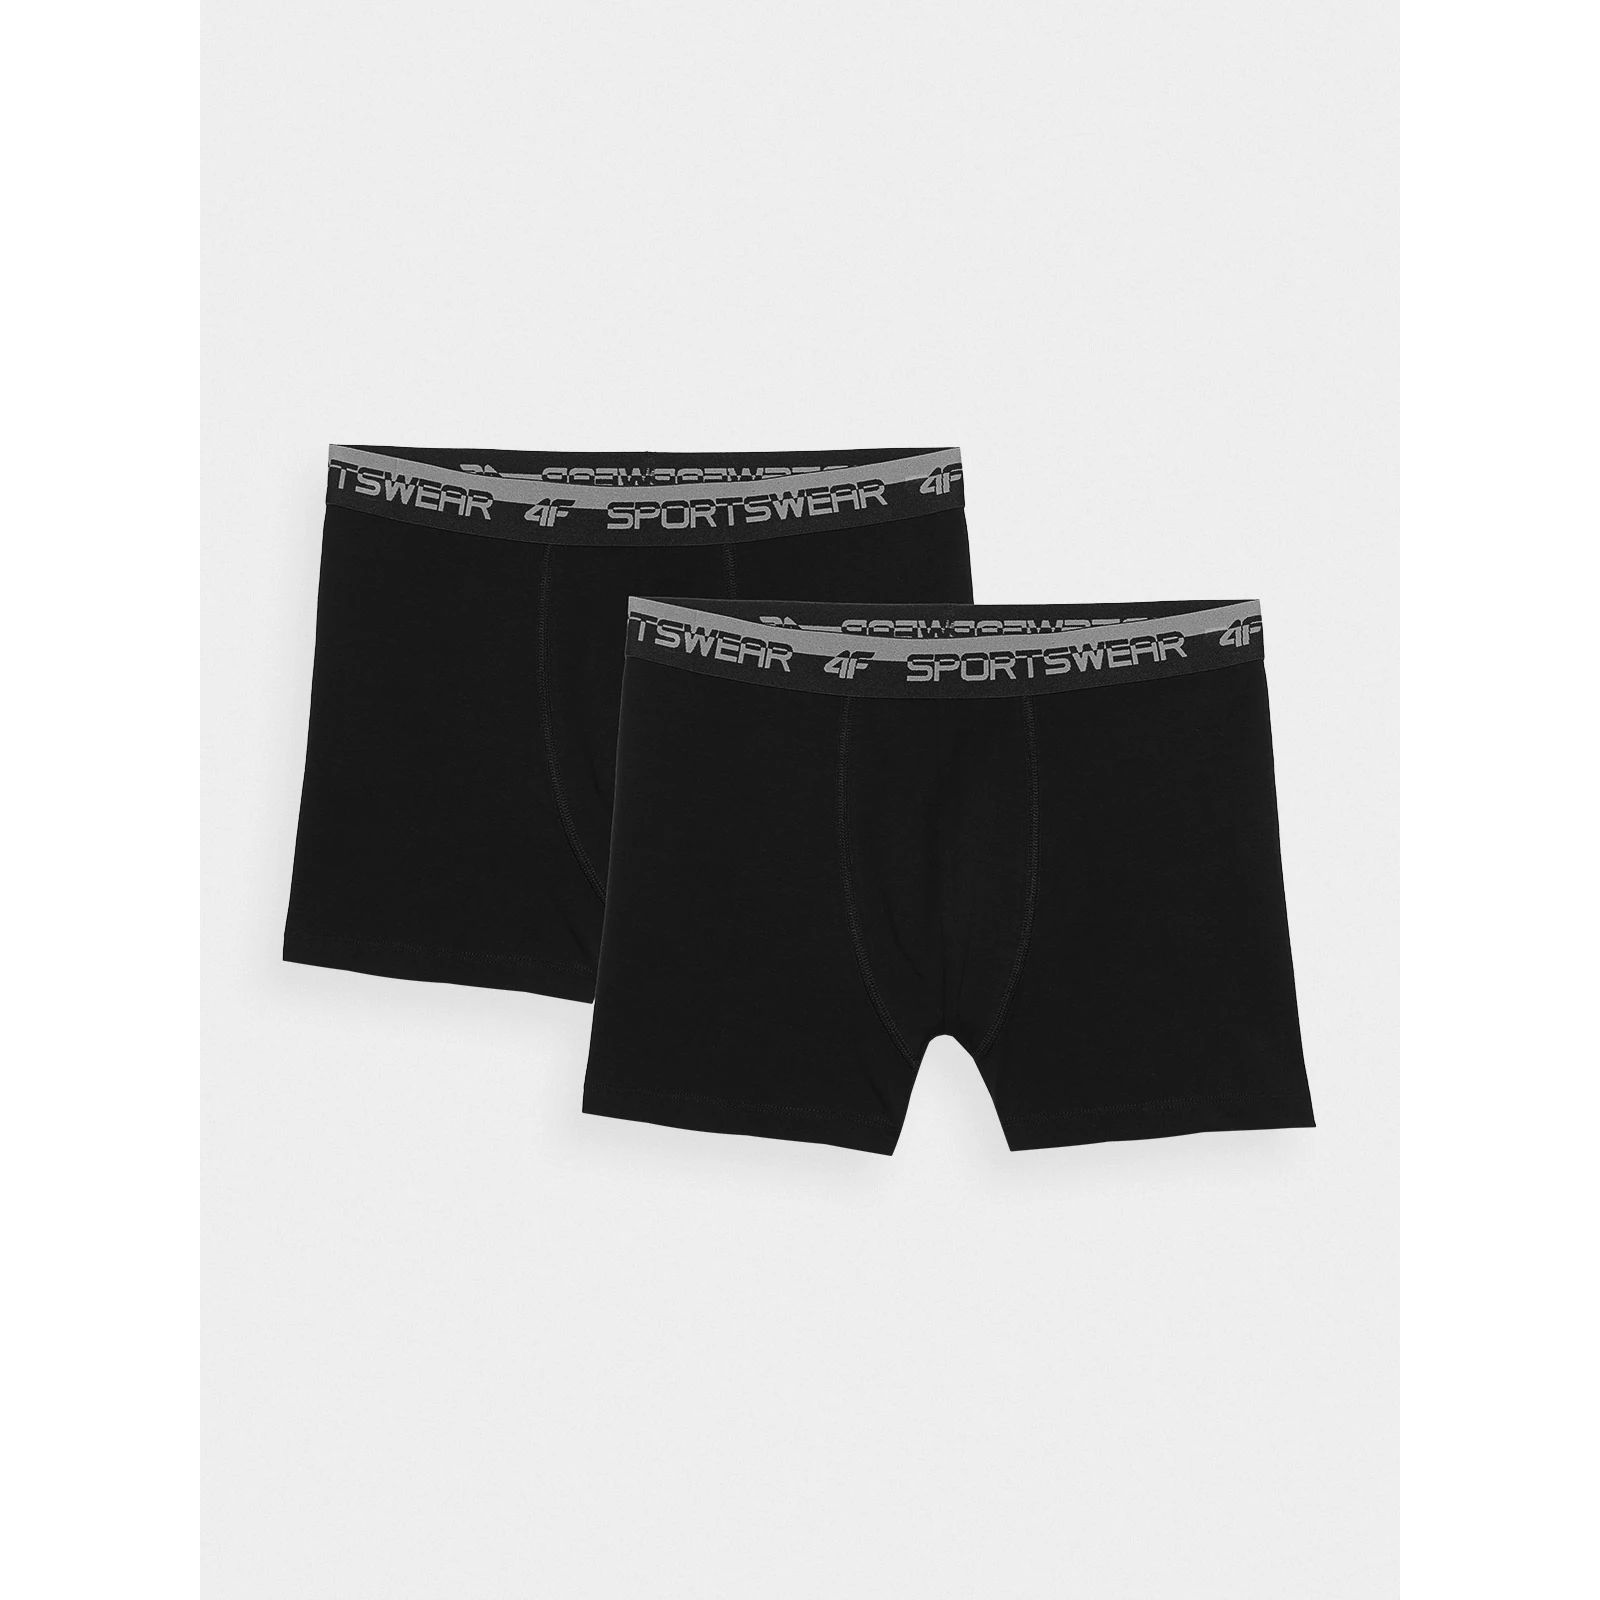 Underwear -  4f BOXER SHORTS  M036 (2pack)